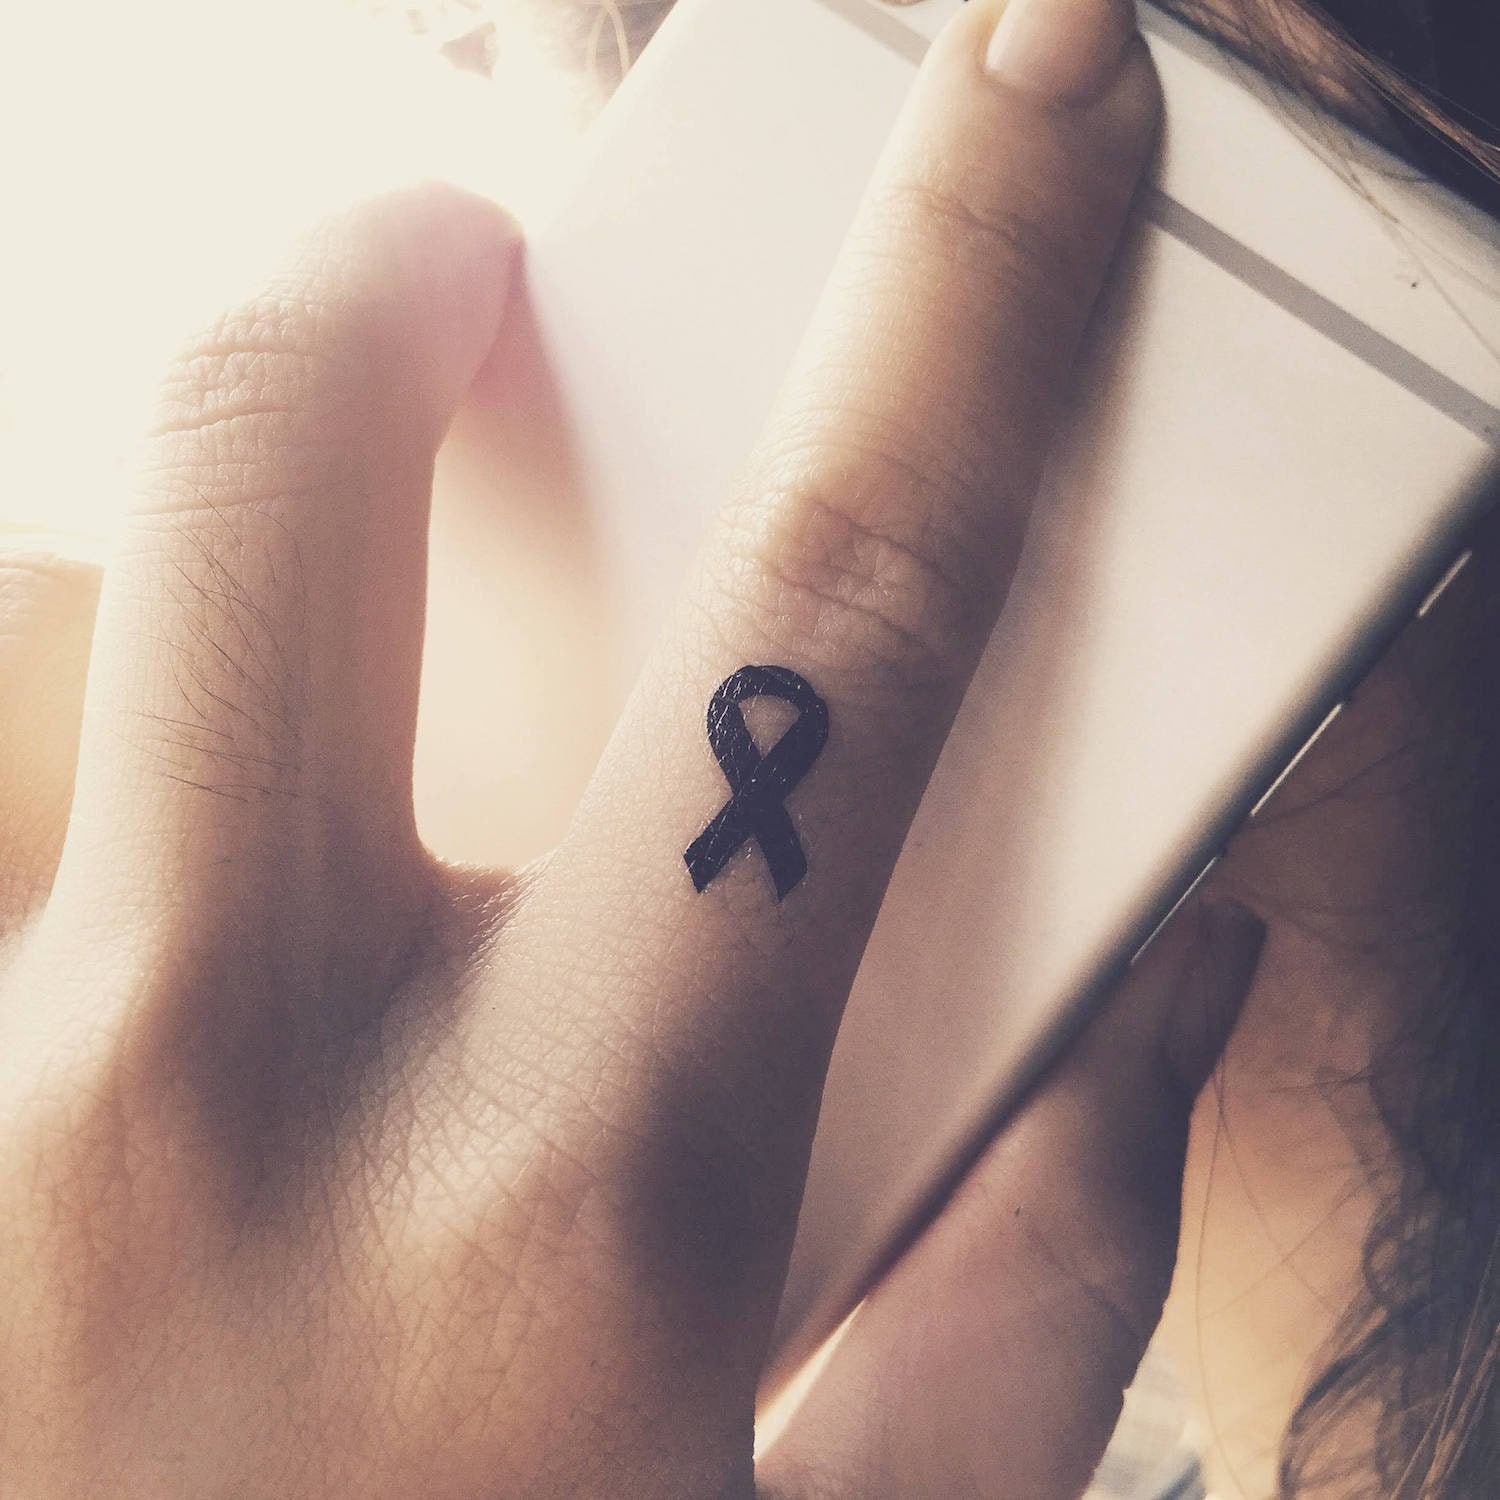 Fuck Cancer fxckcancer  Instagram photos and videos